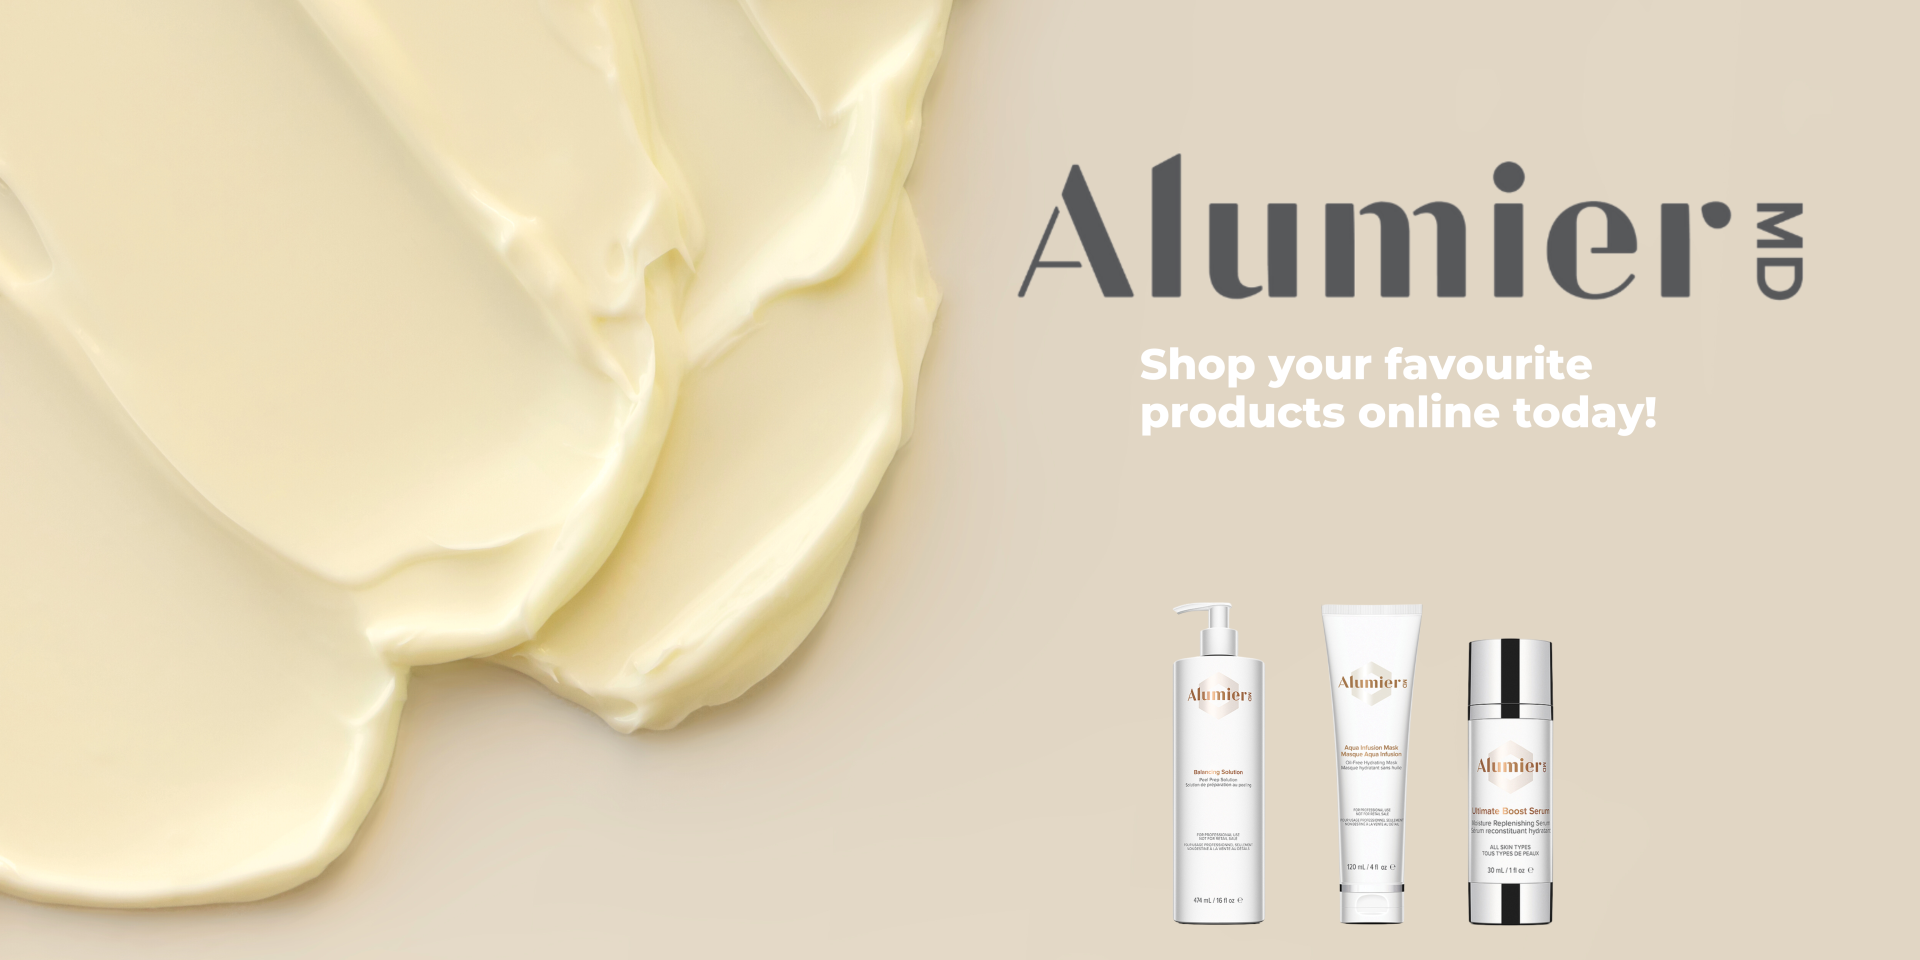 Alumier Online Shopping Portal